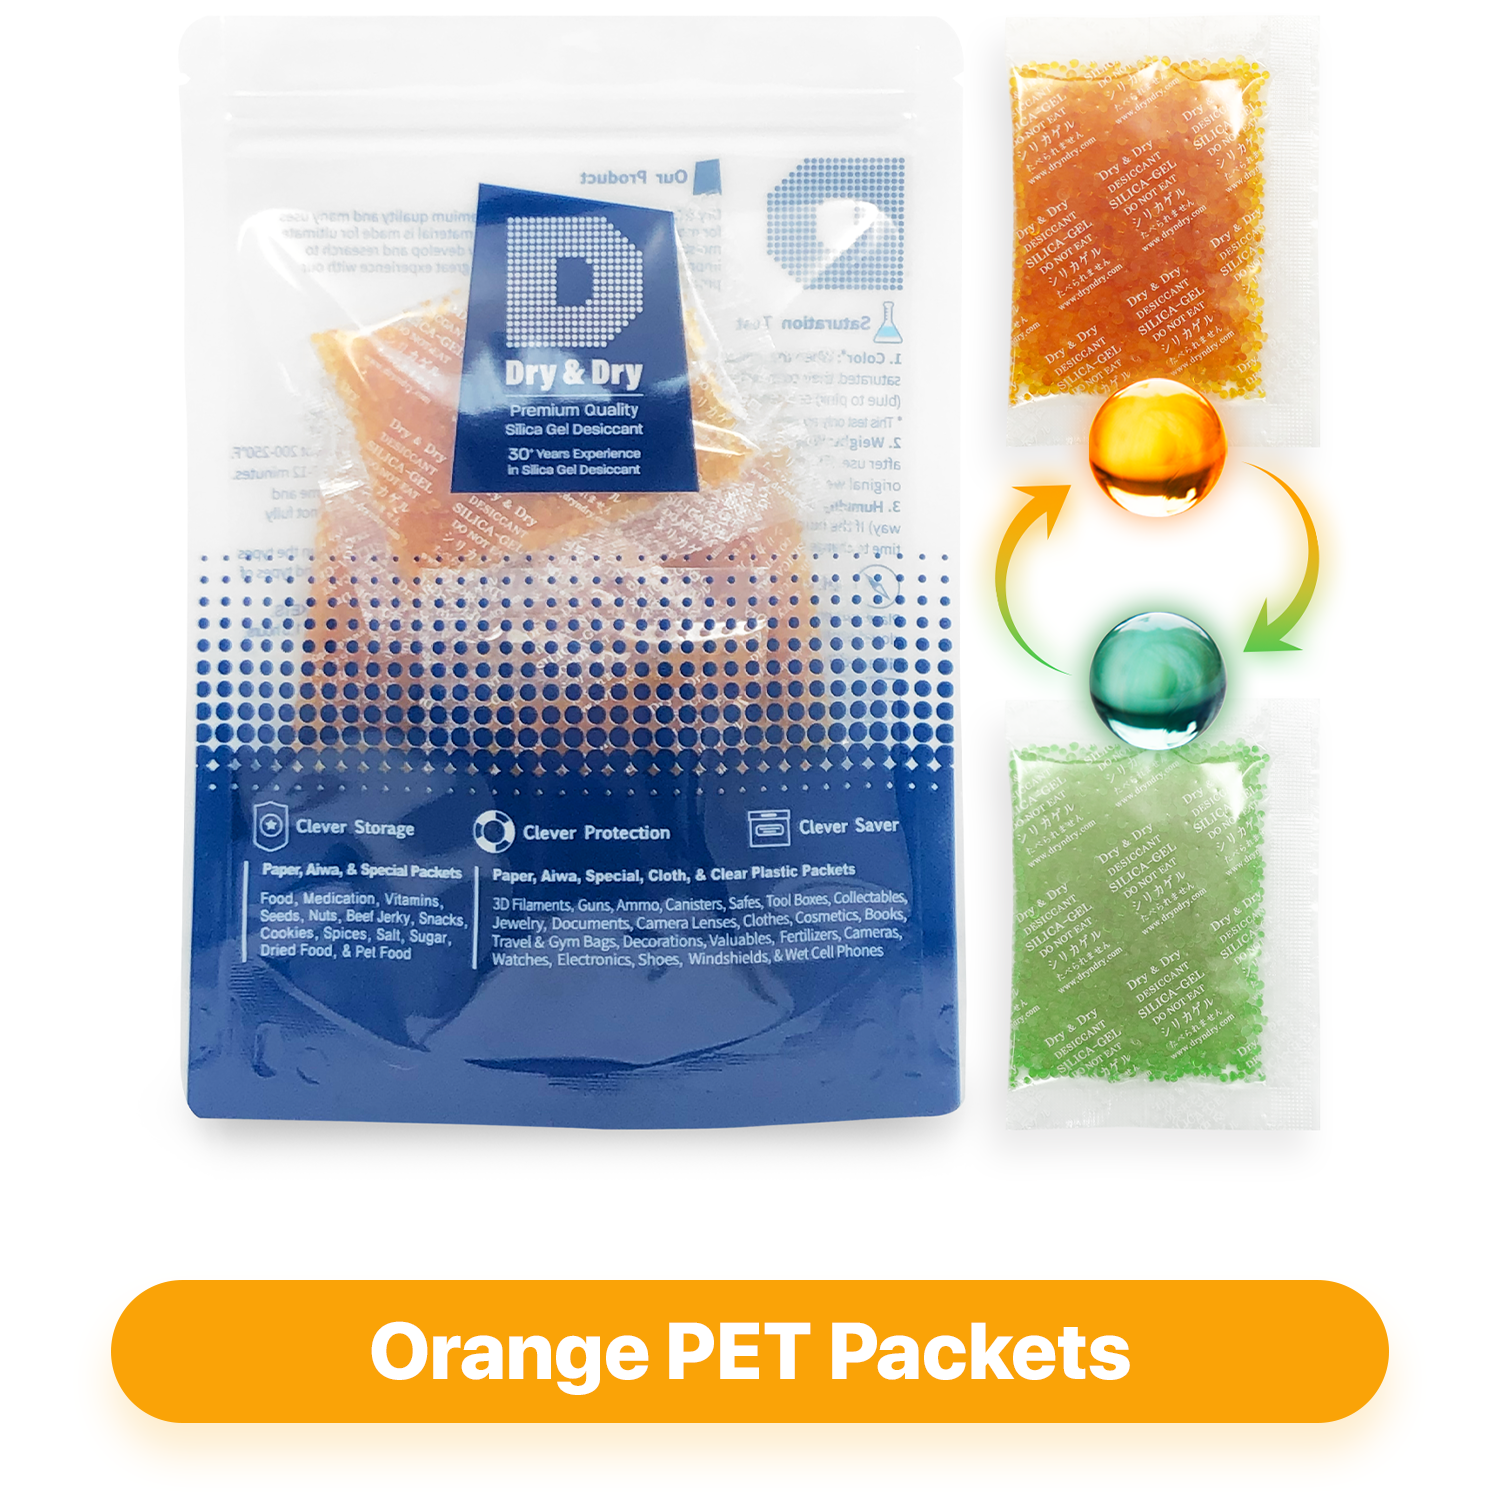 20 Gram Orange Indicating Clear Plastic(PET) Silica Gel Packets